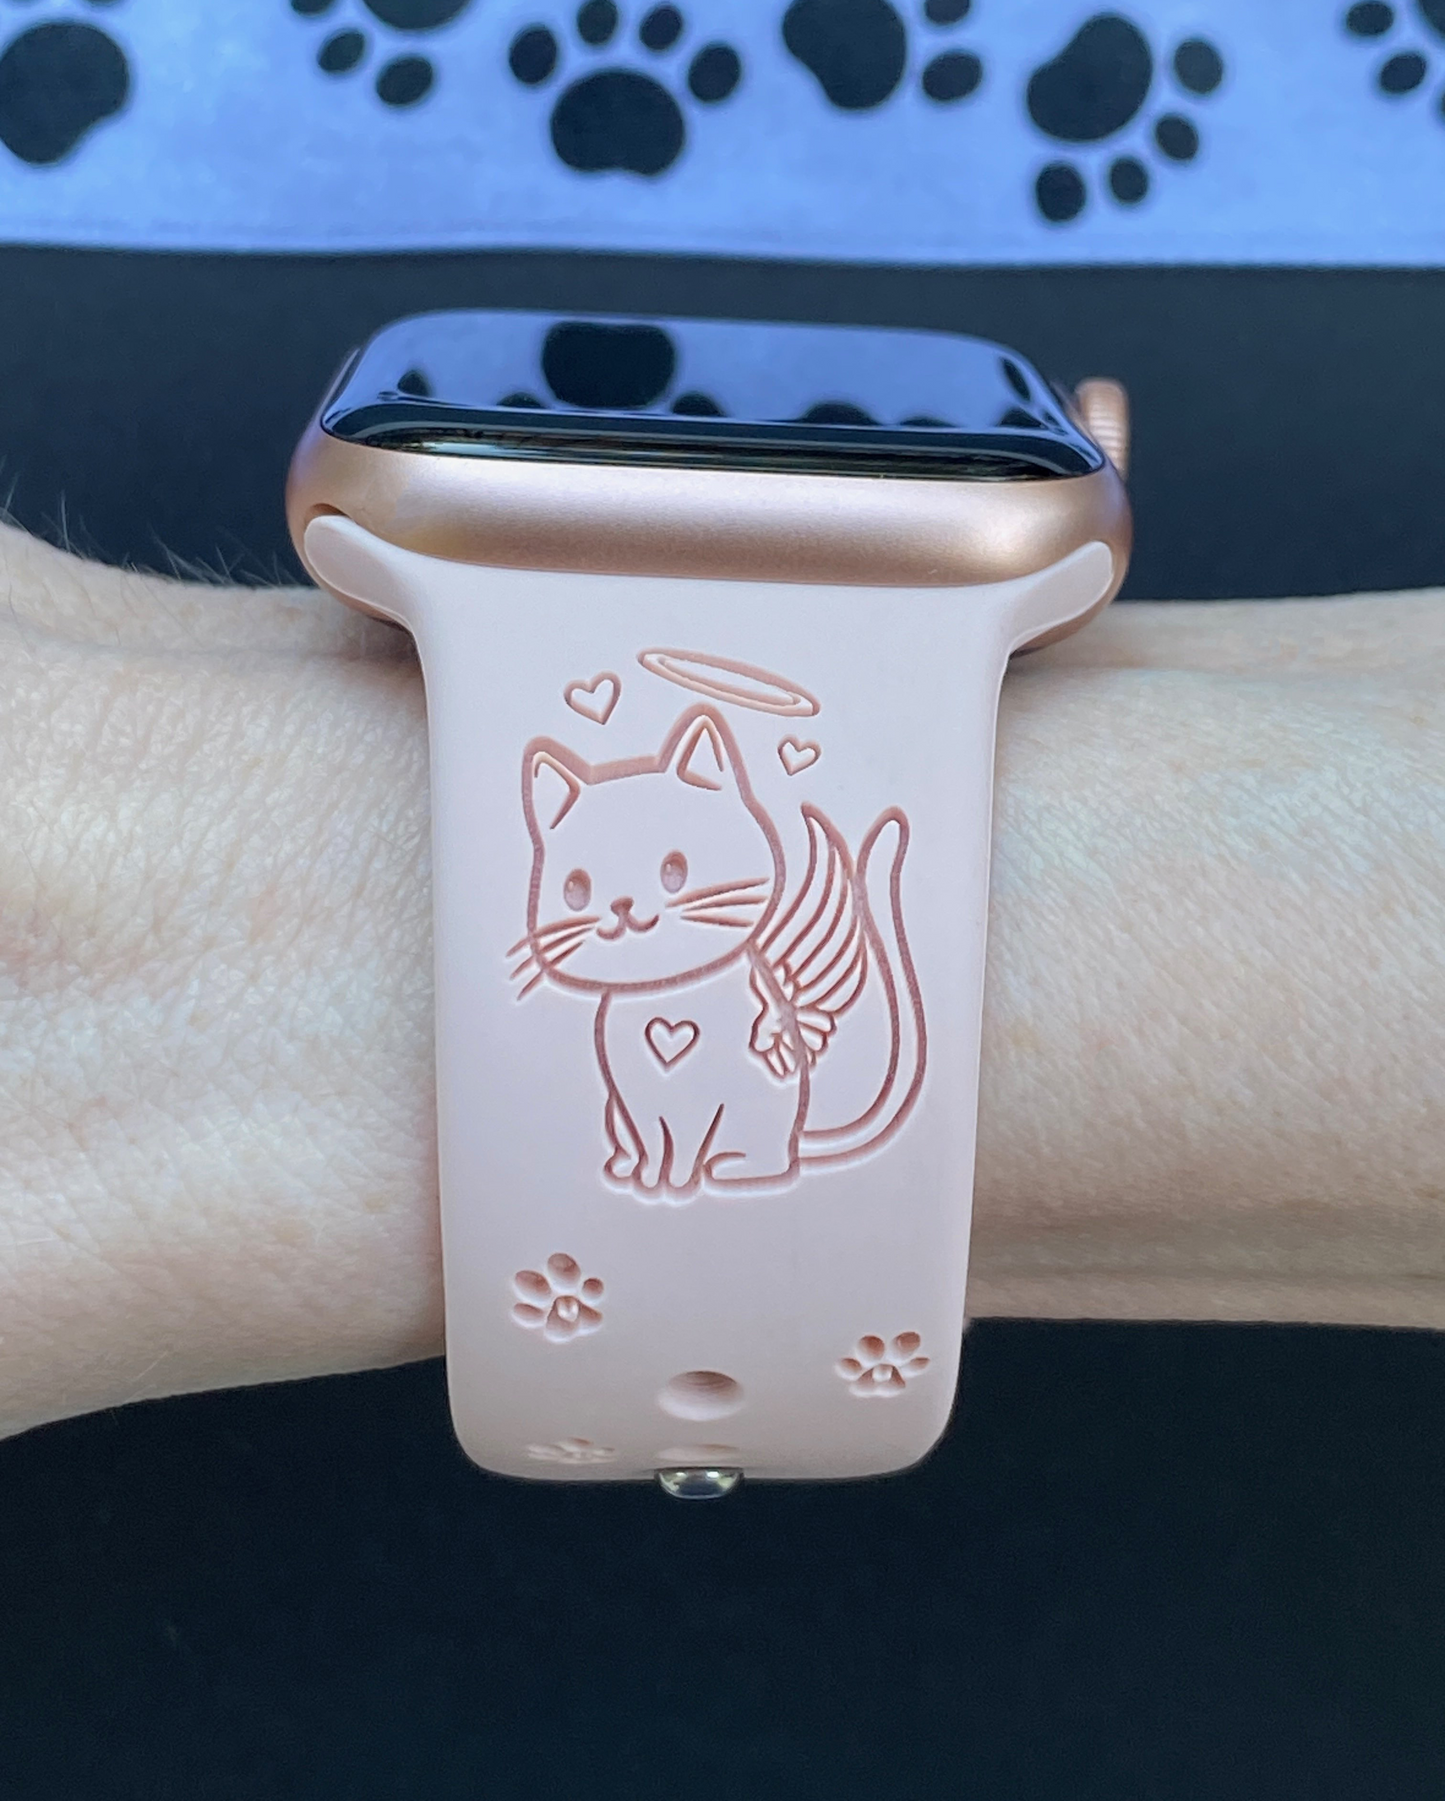 Cat Memorial Apple Watch Band